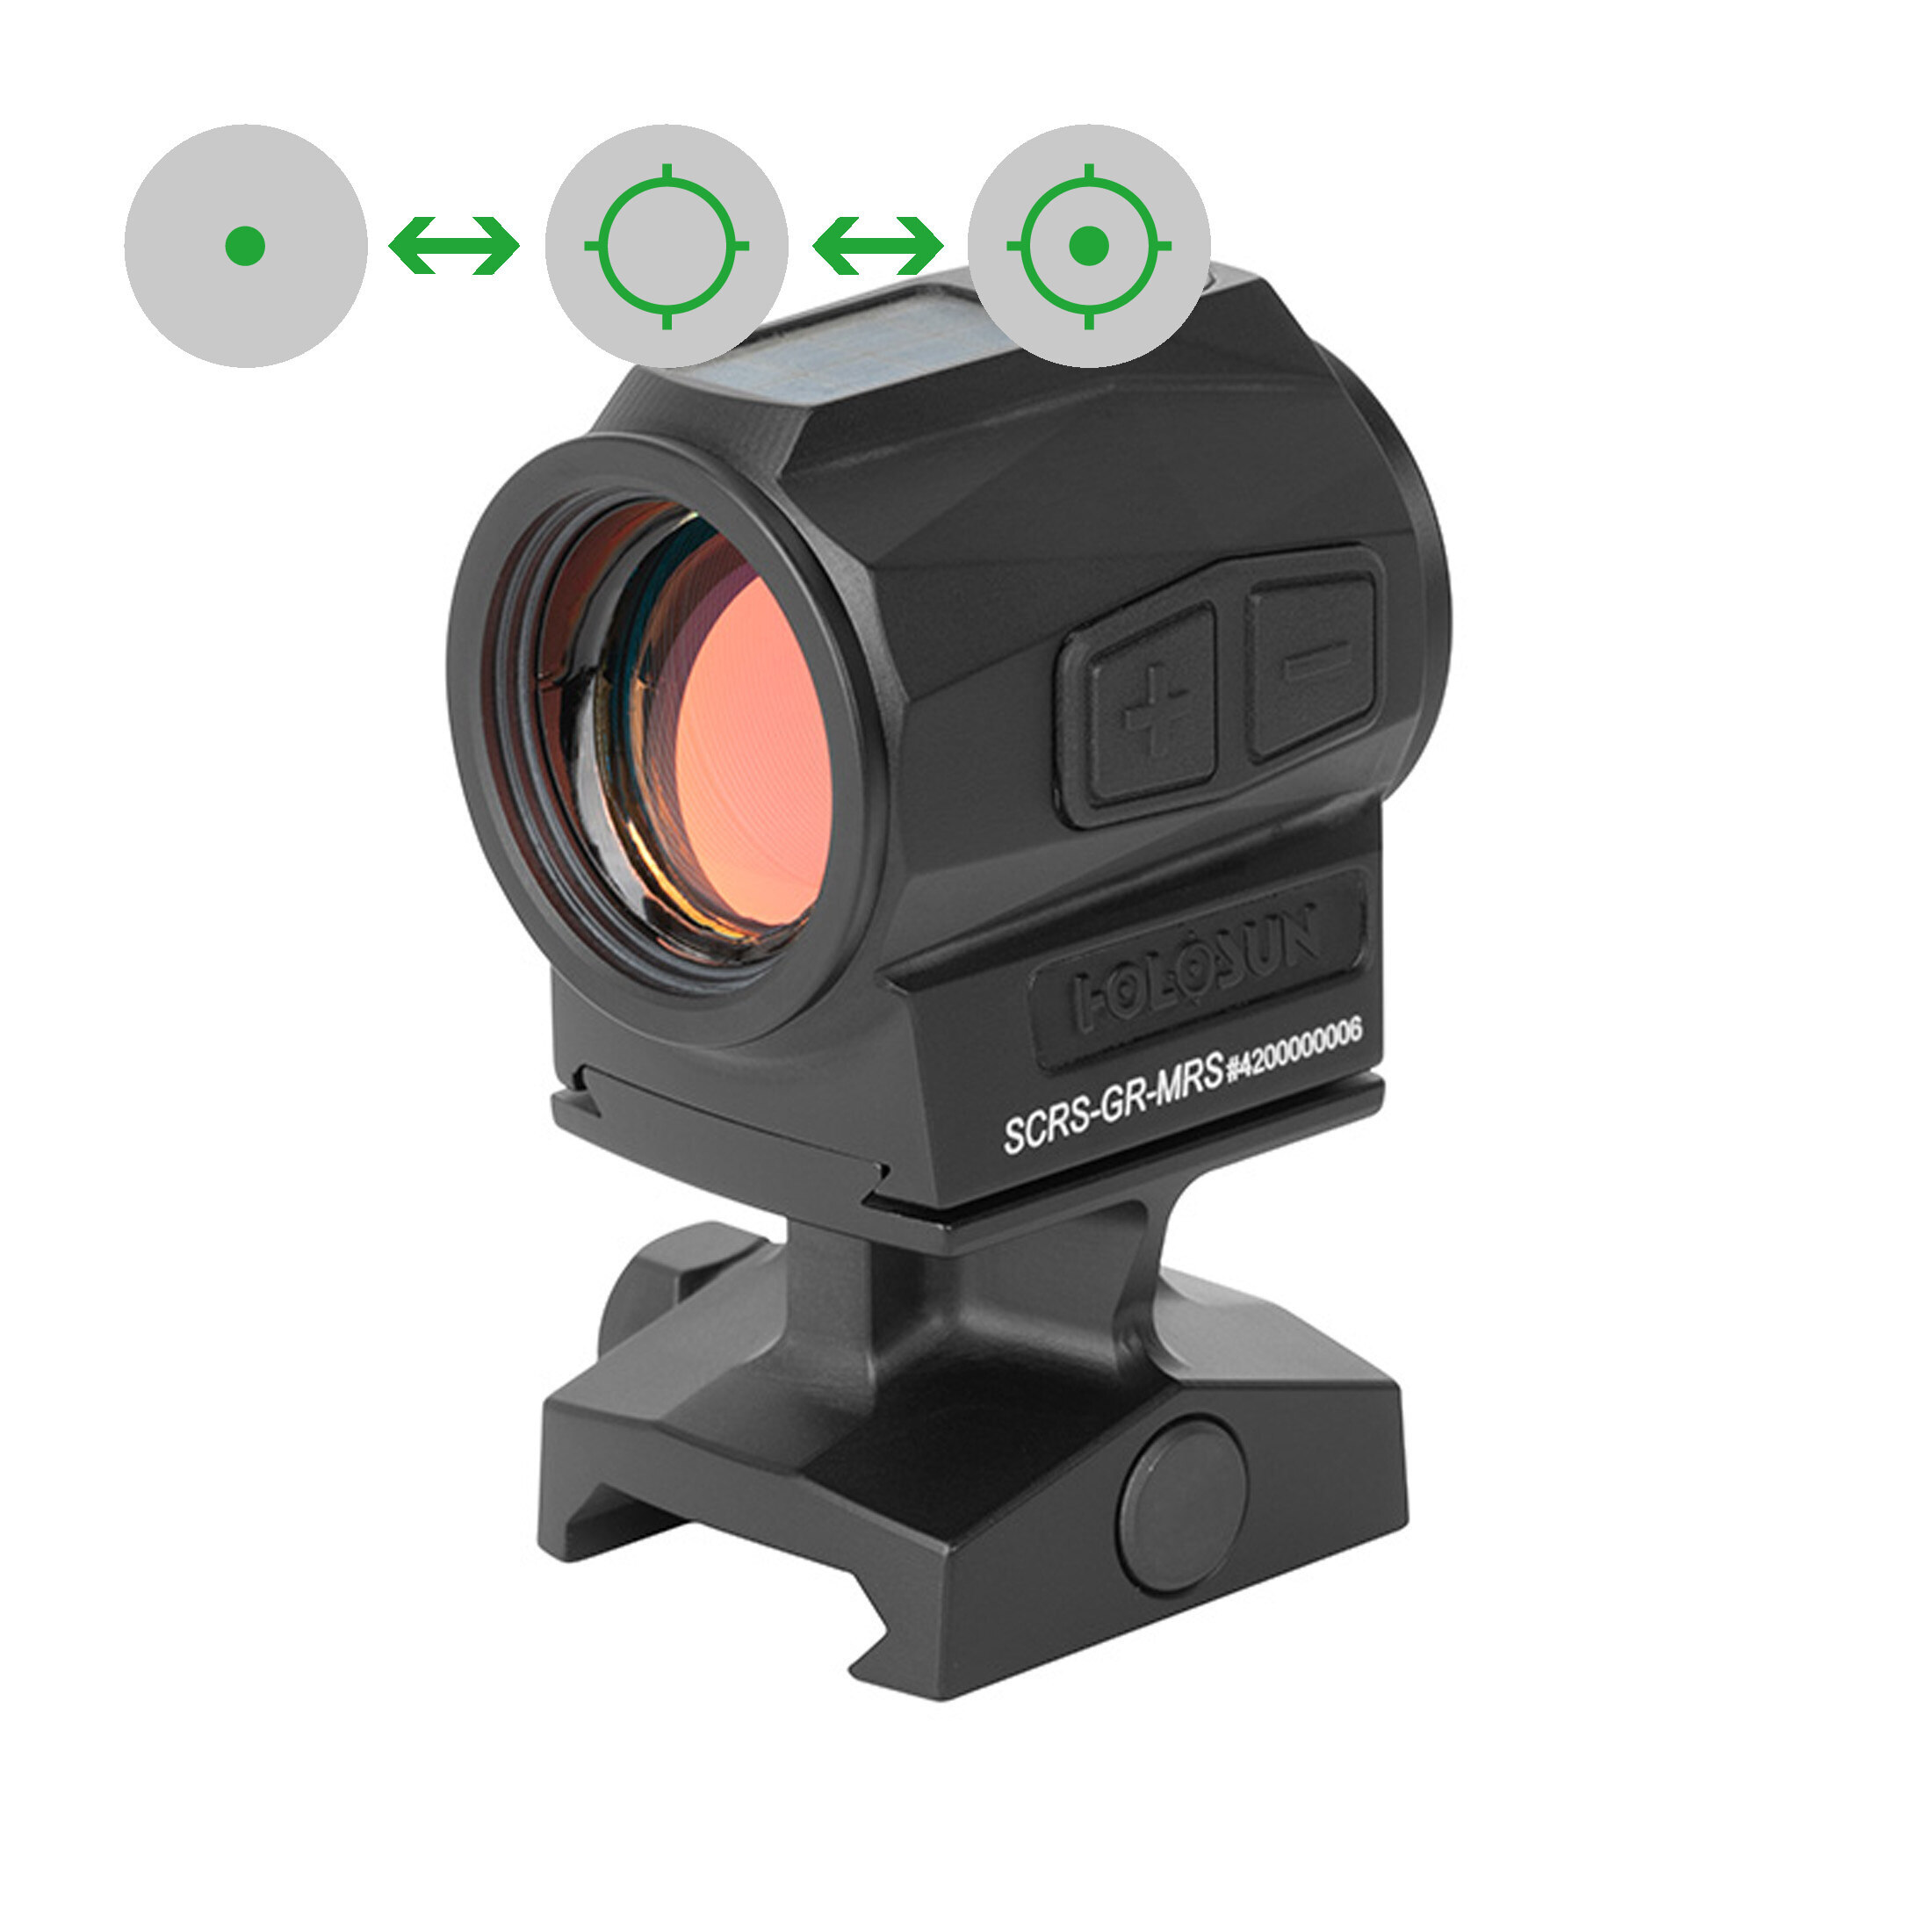 Holosun SCRS-GR-MRS Micro-viseur Point vert Viseur Reflex Cercle avec point, Viseur Reflex, Réticul…